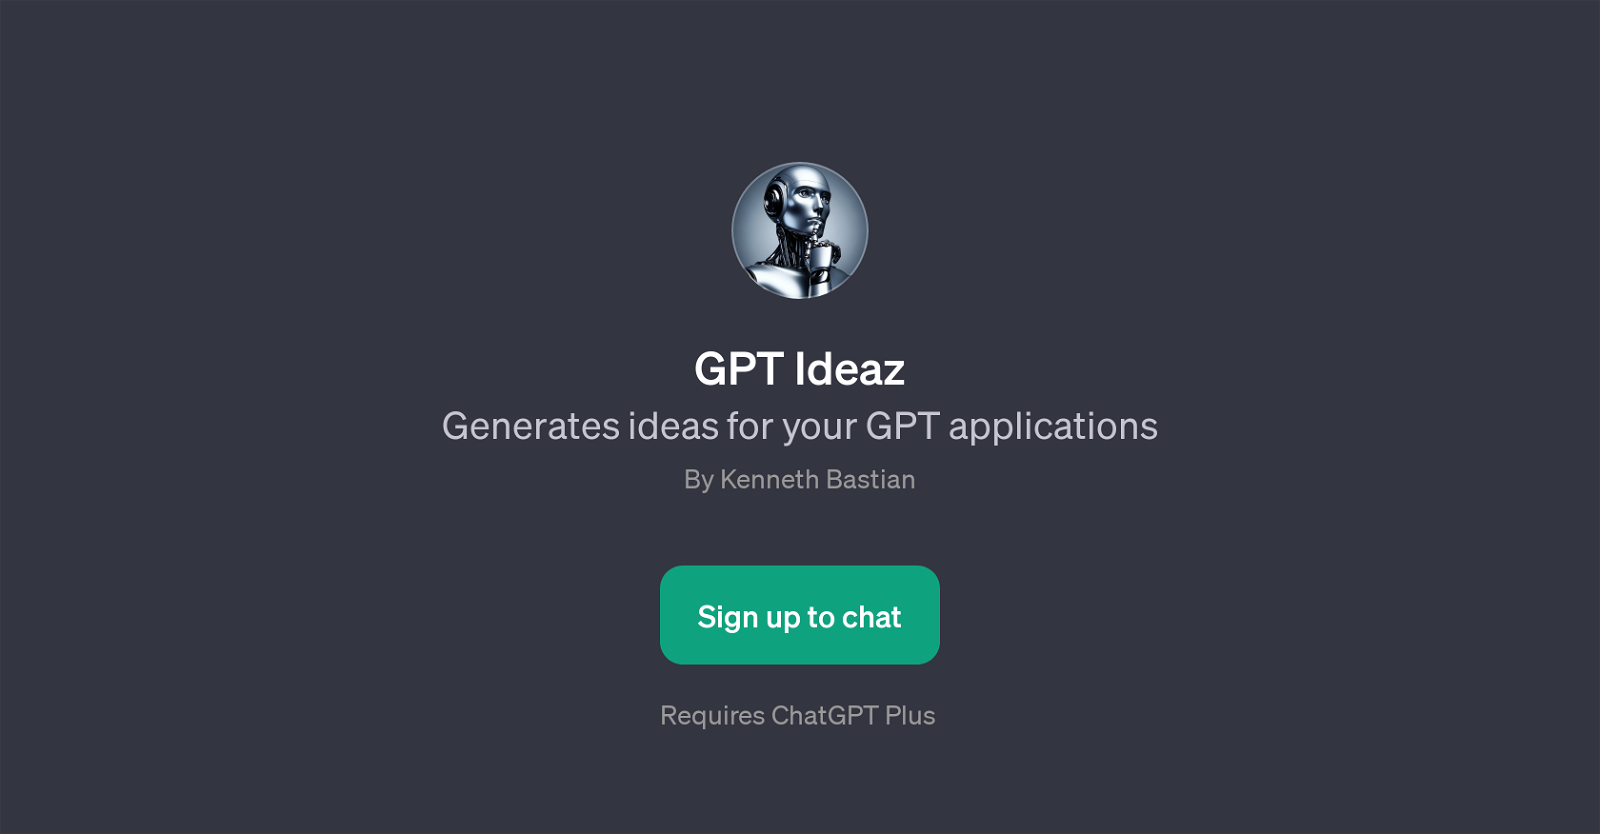 GPT Ideaz website